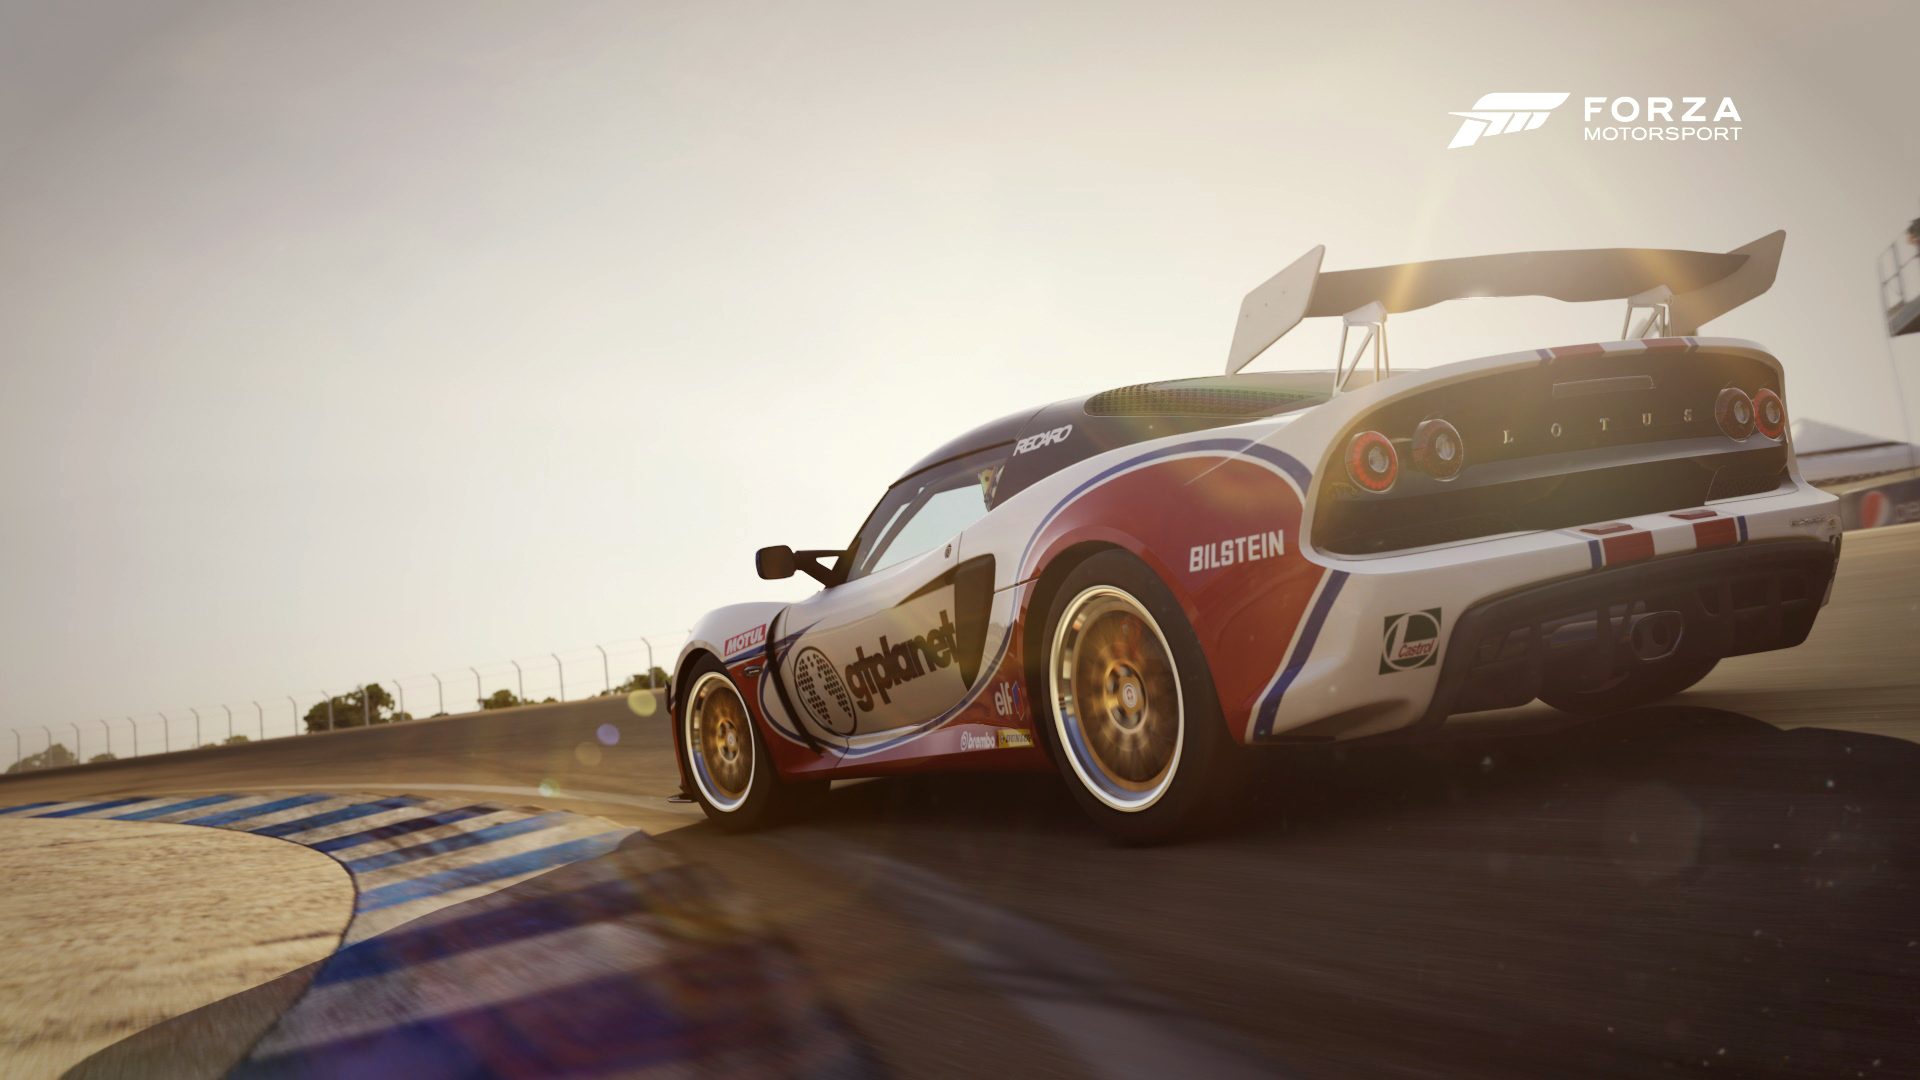 Forza Motorsport 5 - Top Gear Car Pack Released - Inside Sim Racing